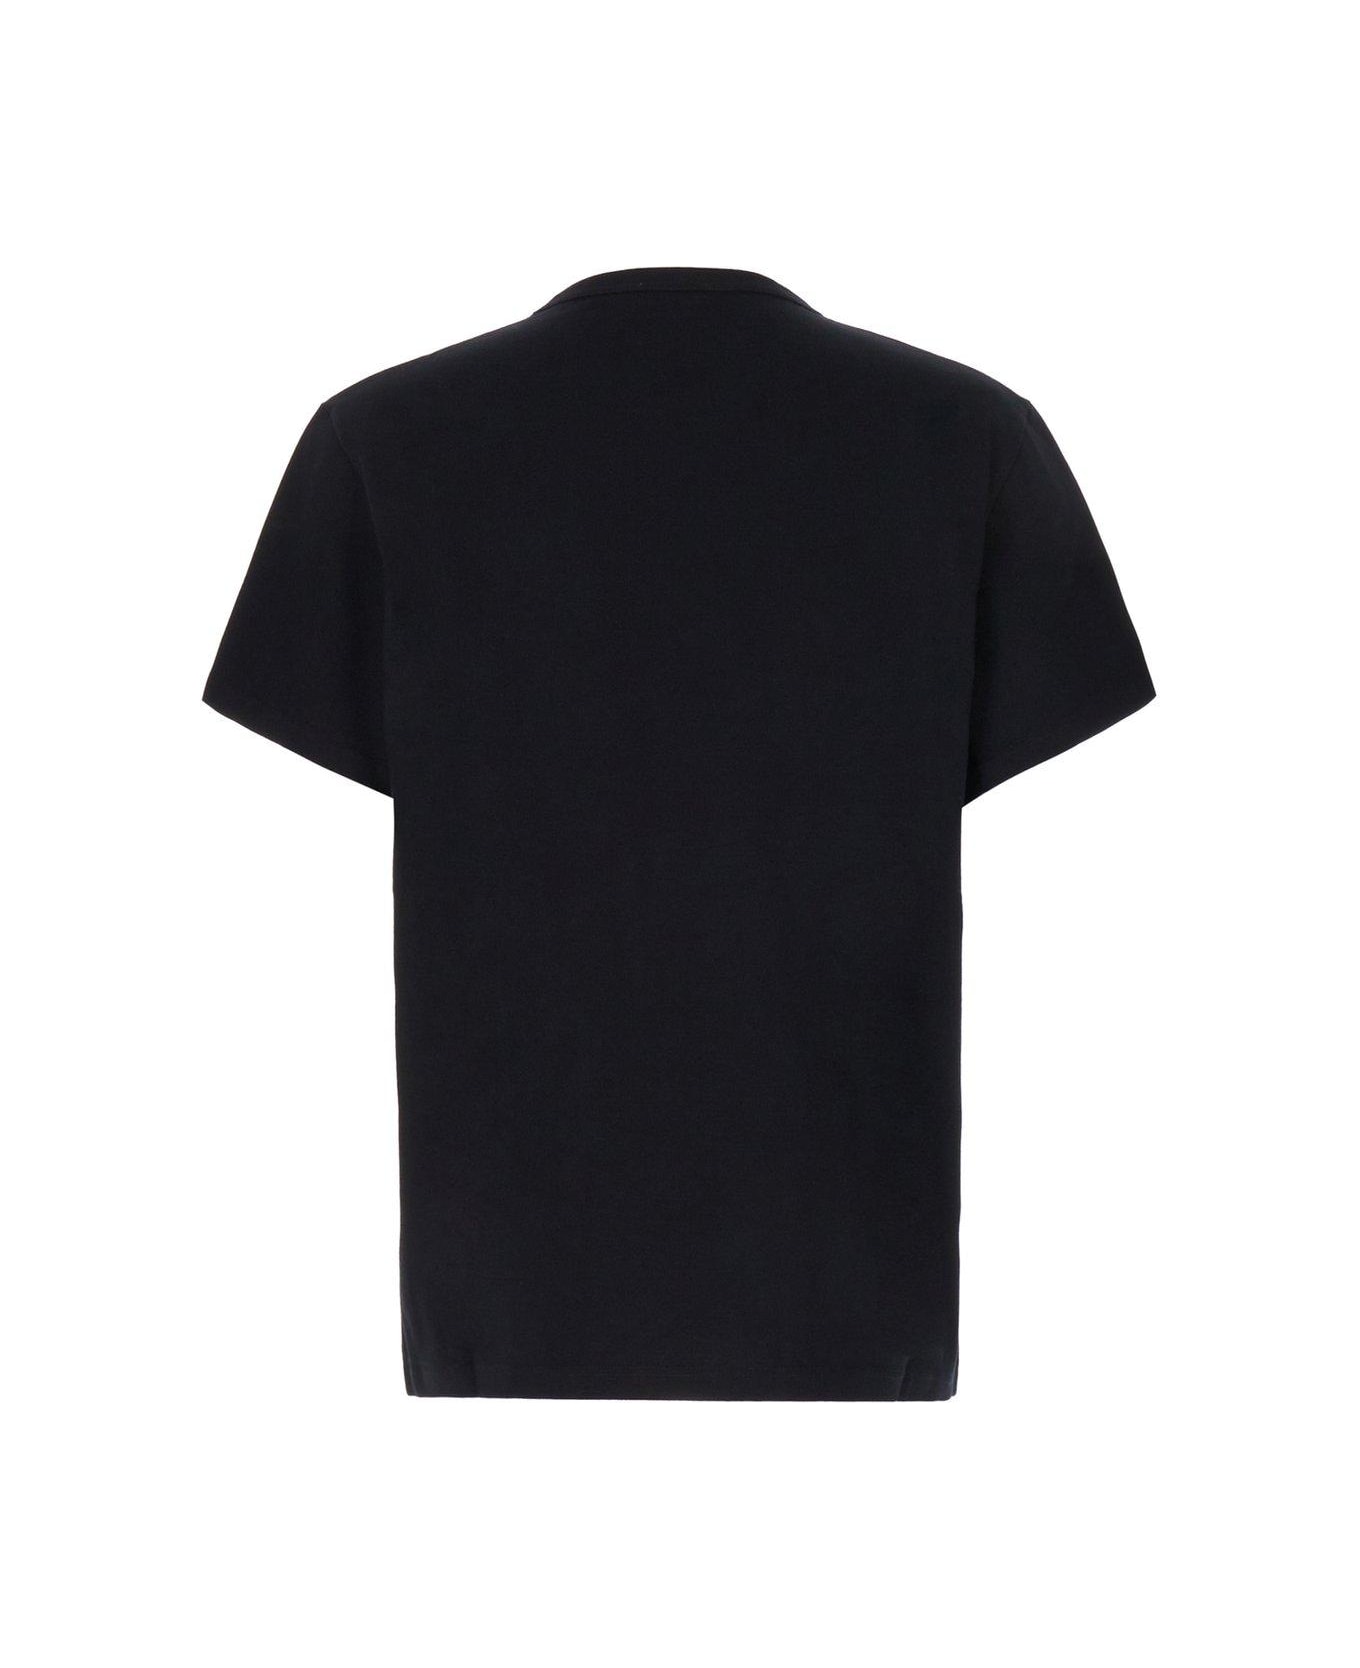 Alexander McQueen Skull Embellished Crewneck T-shirt - Black